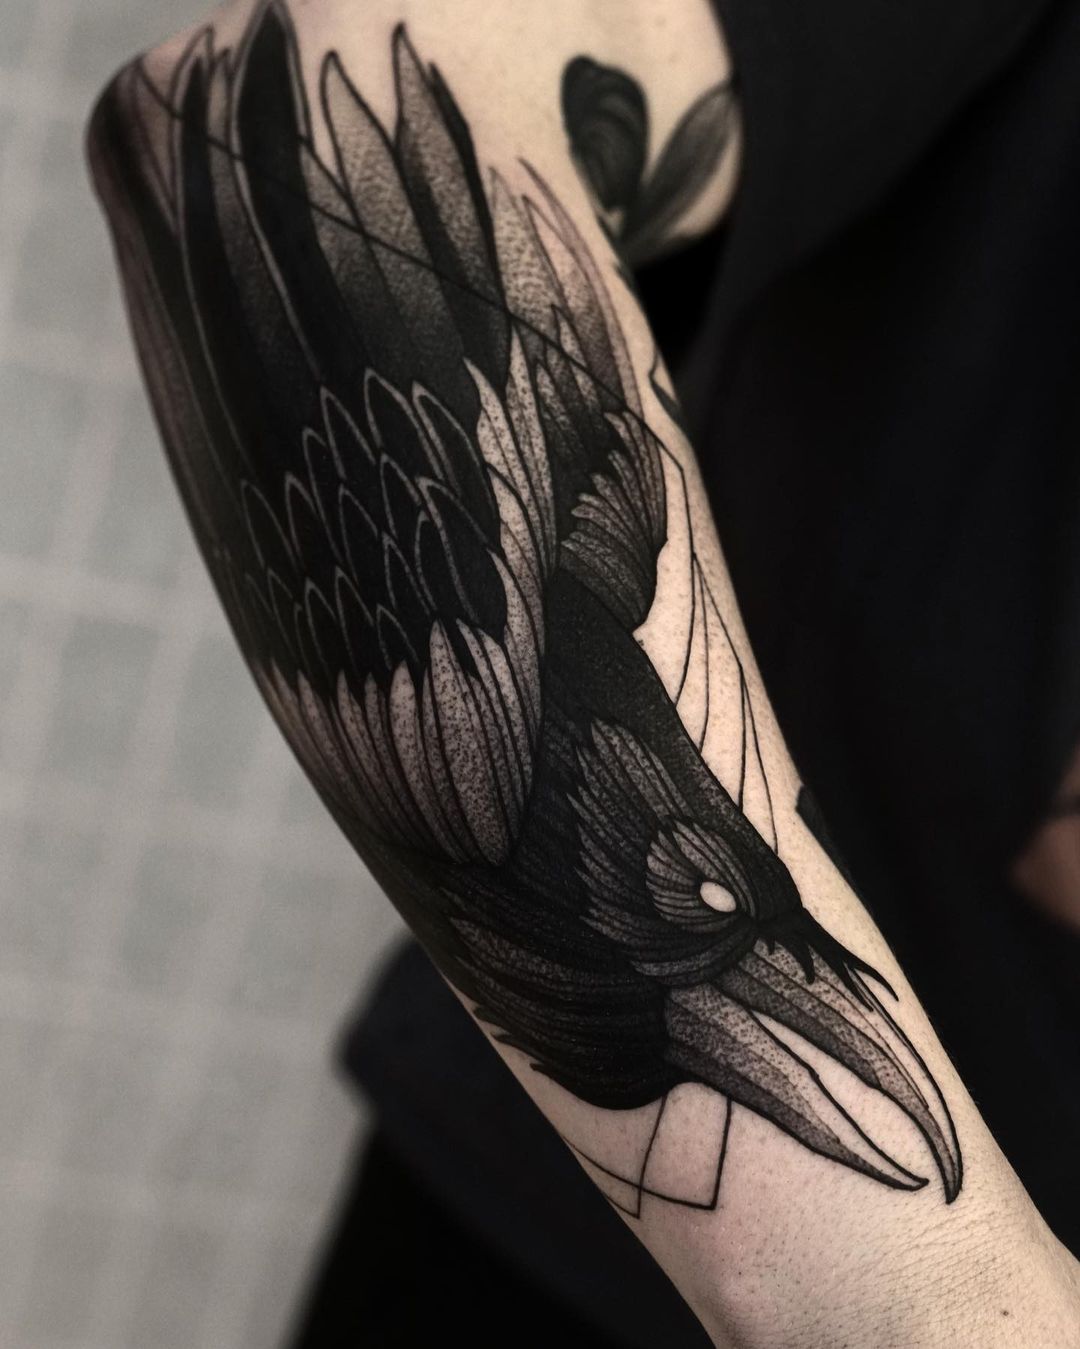 Rook x Raven Tattoos - The Rook x Raven Tattoo Creative